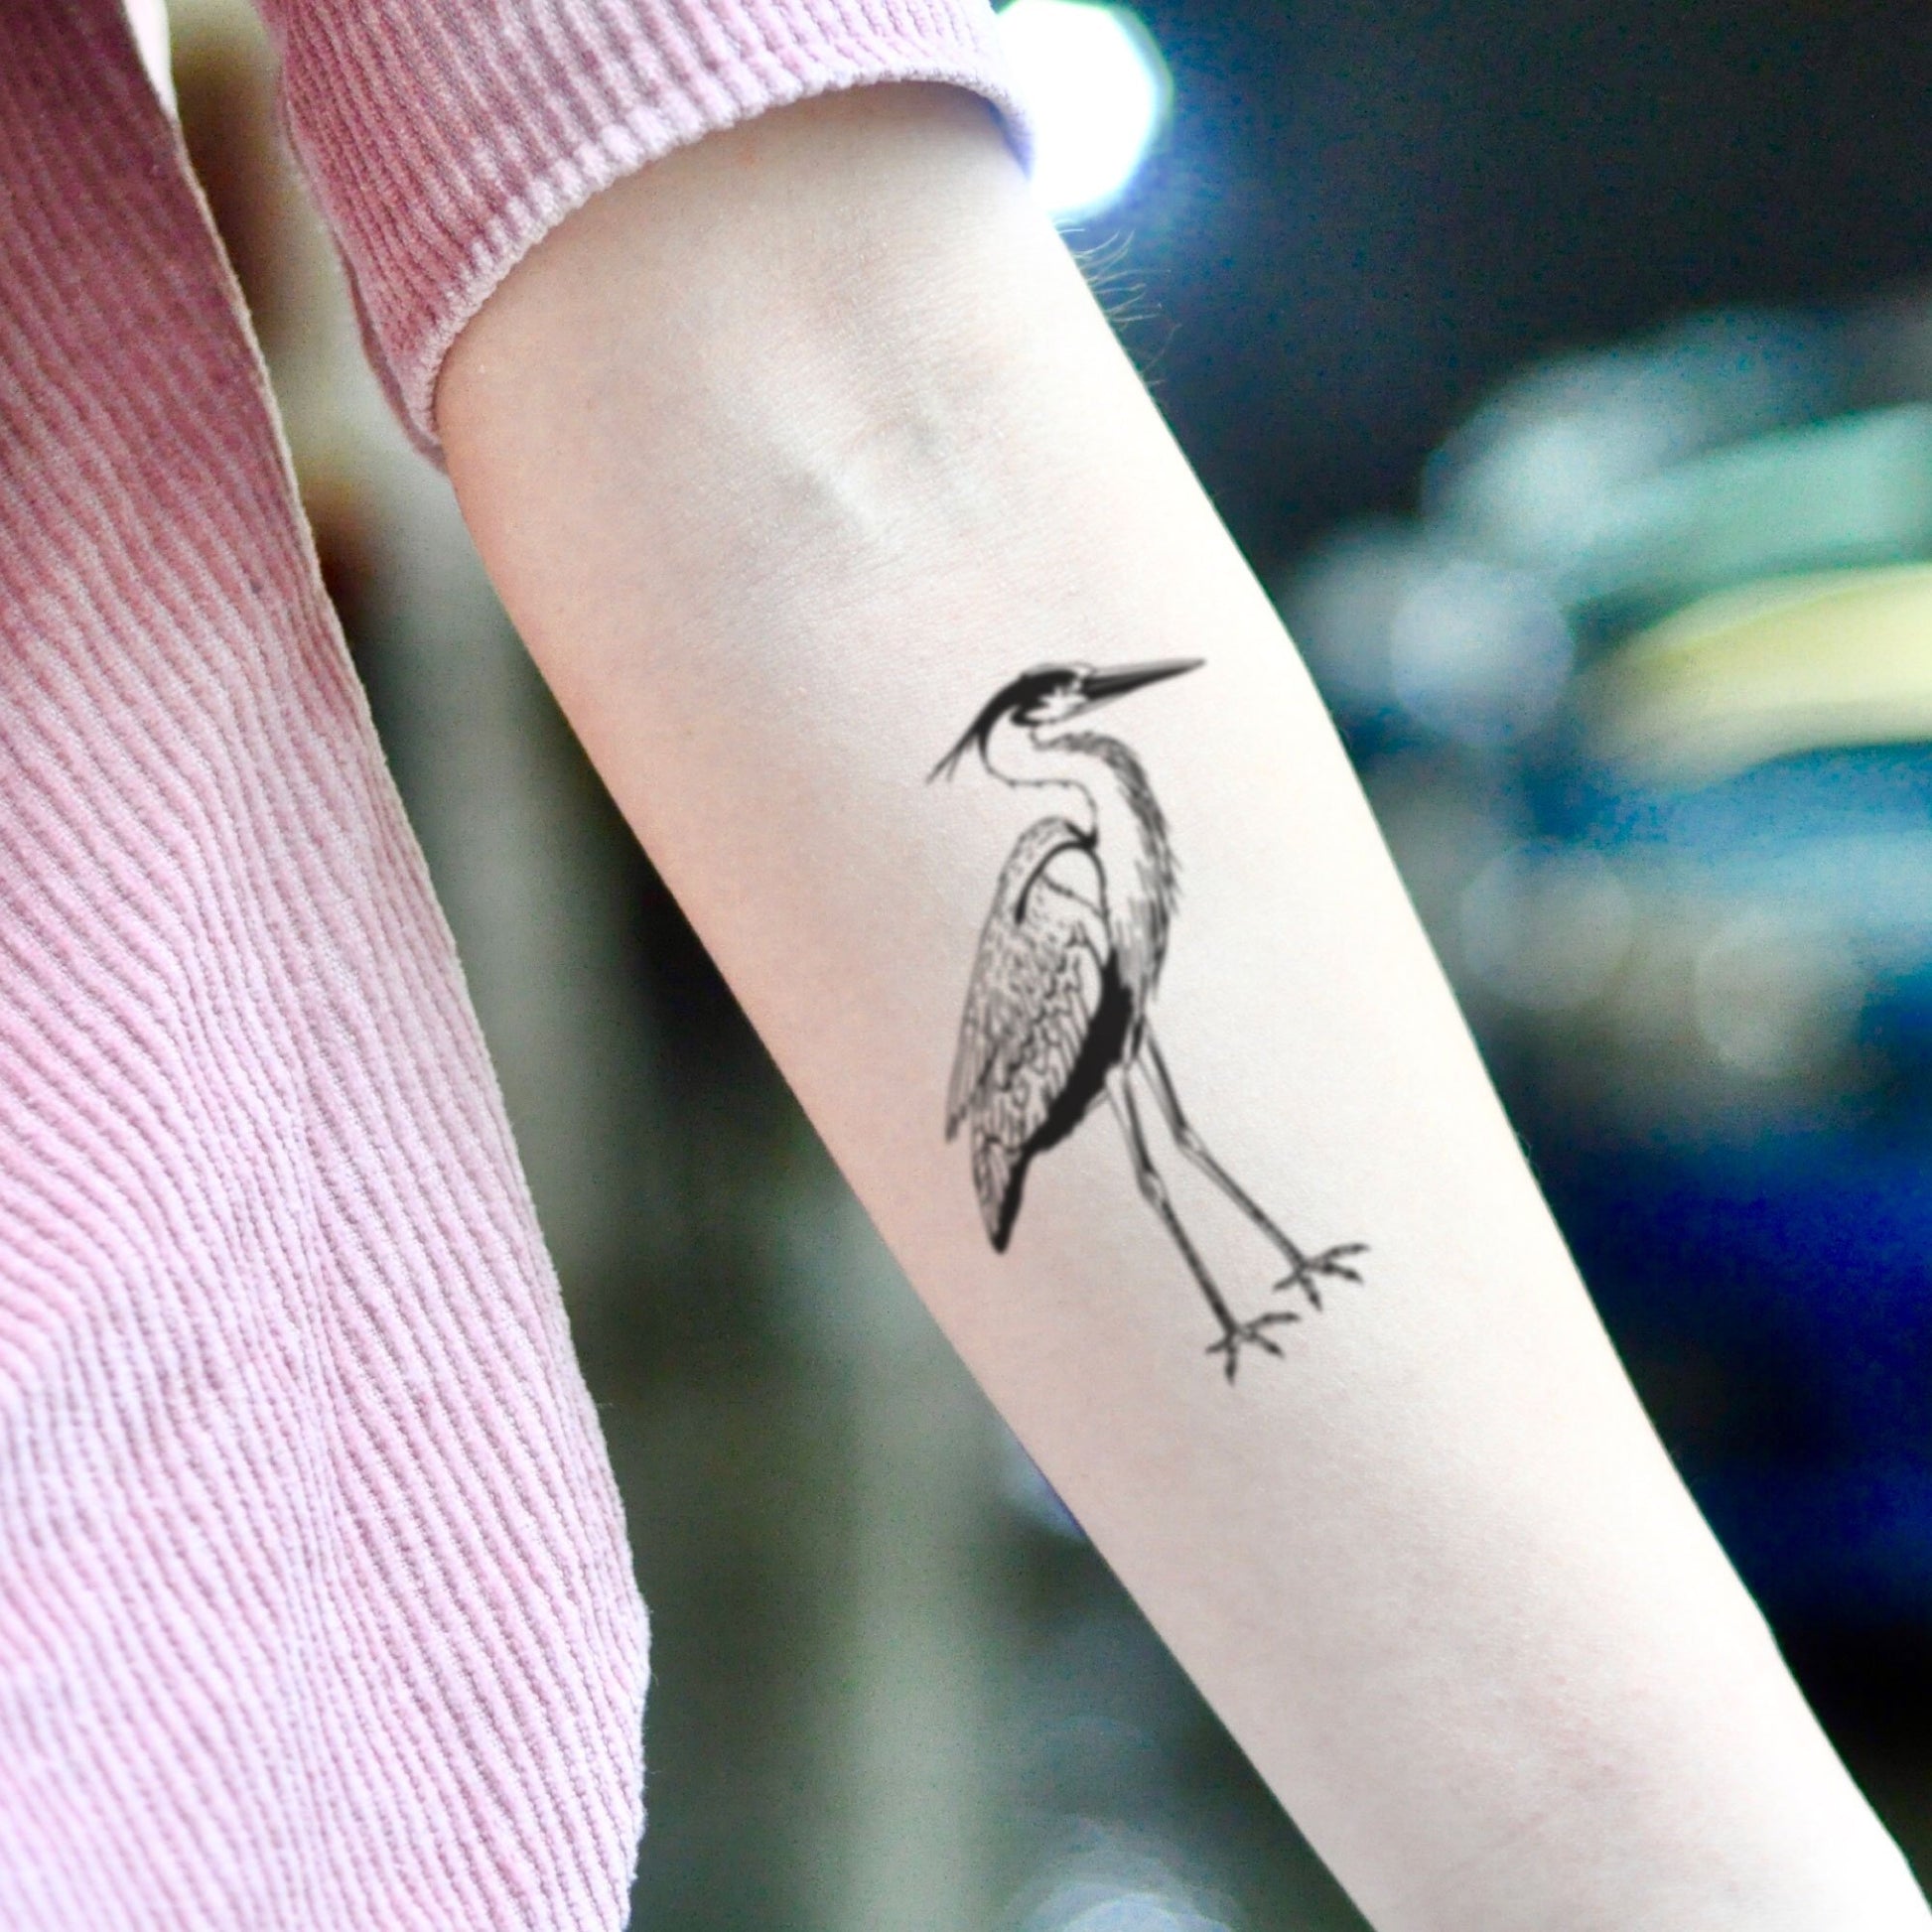 fake small great blue heron animal temporary tattoo sticker design idea on inner arm